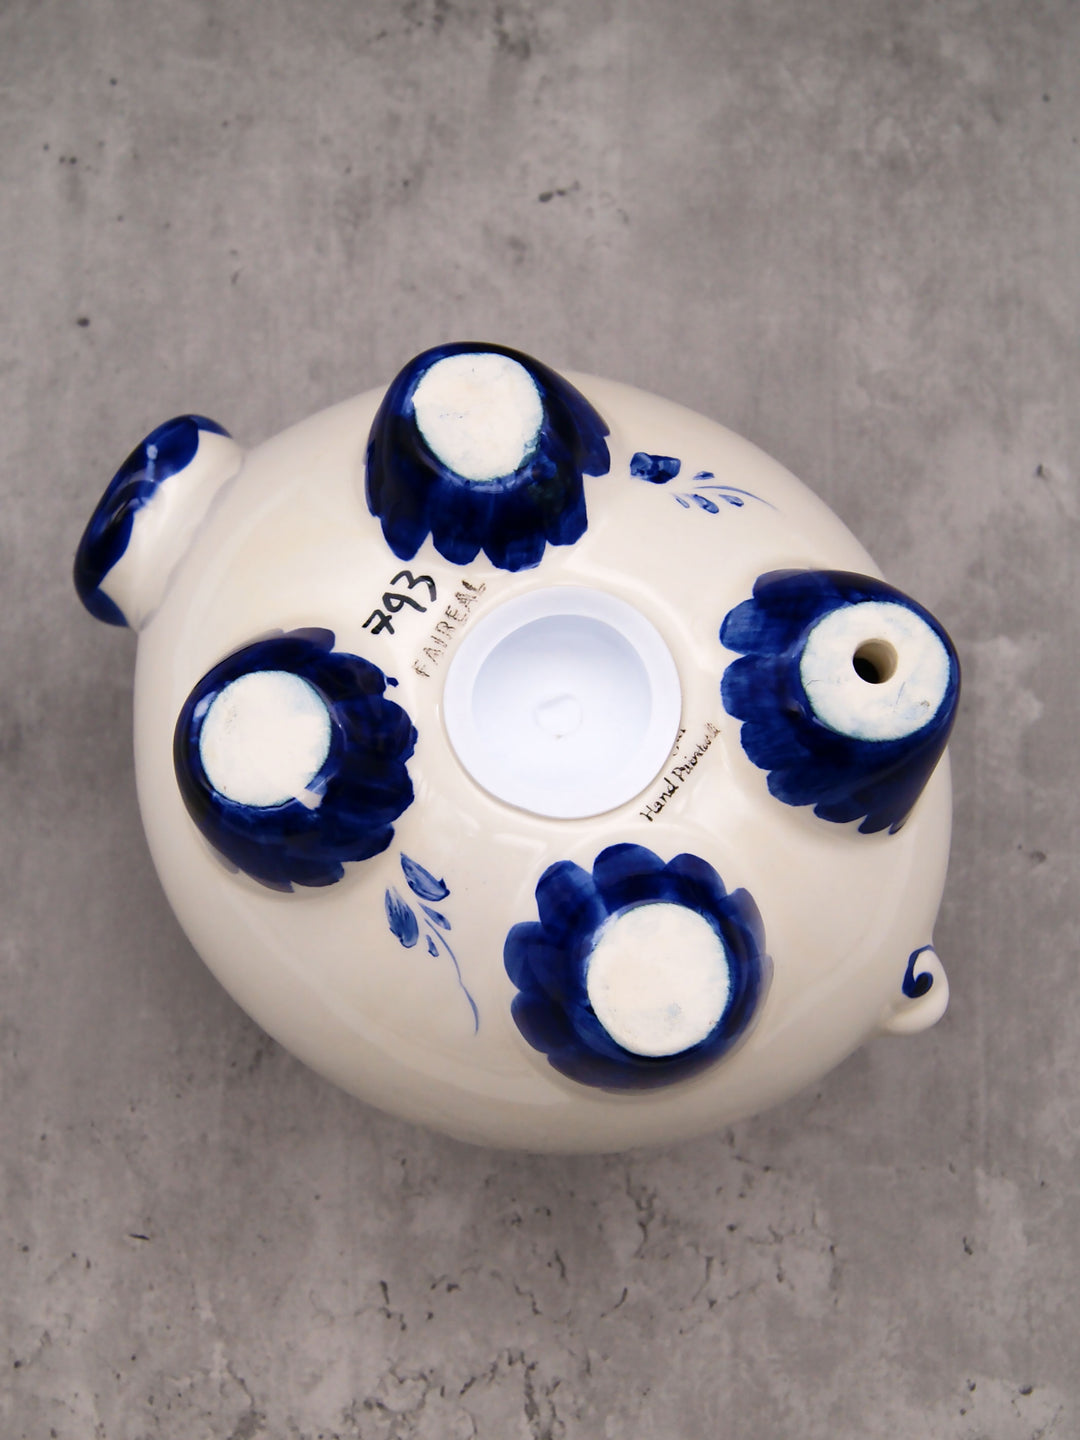 Hand Painted Portuguese Pottery Ceramic Piggy Bank